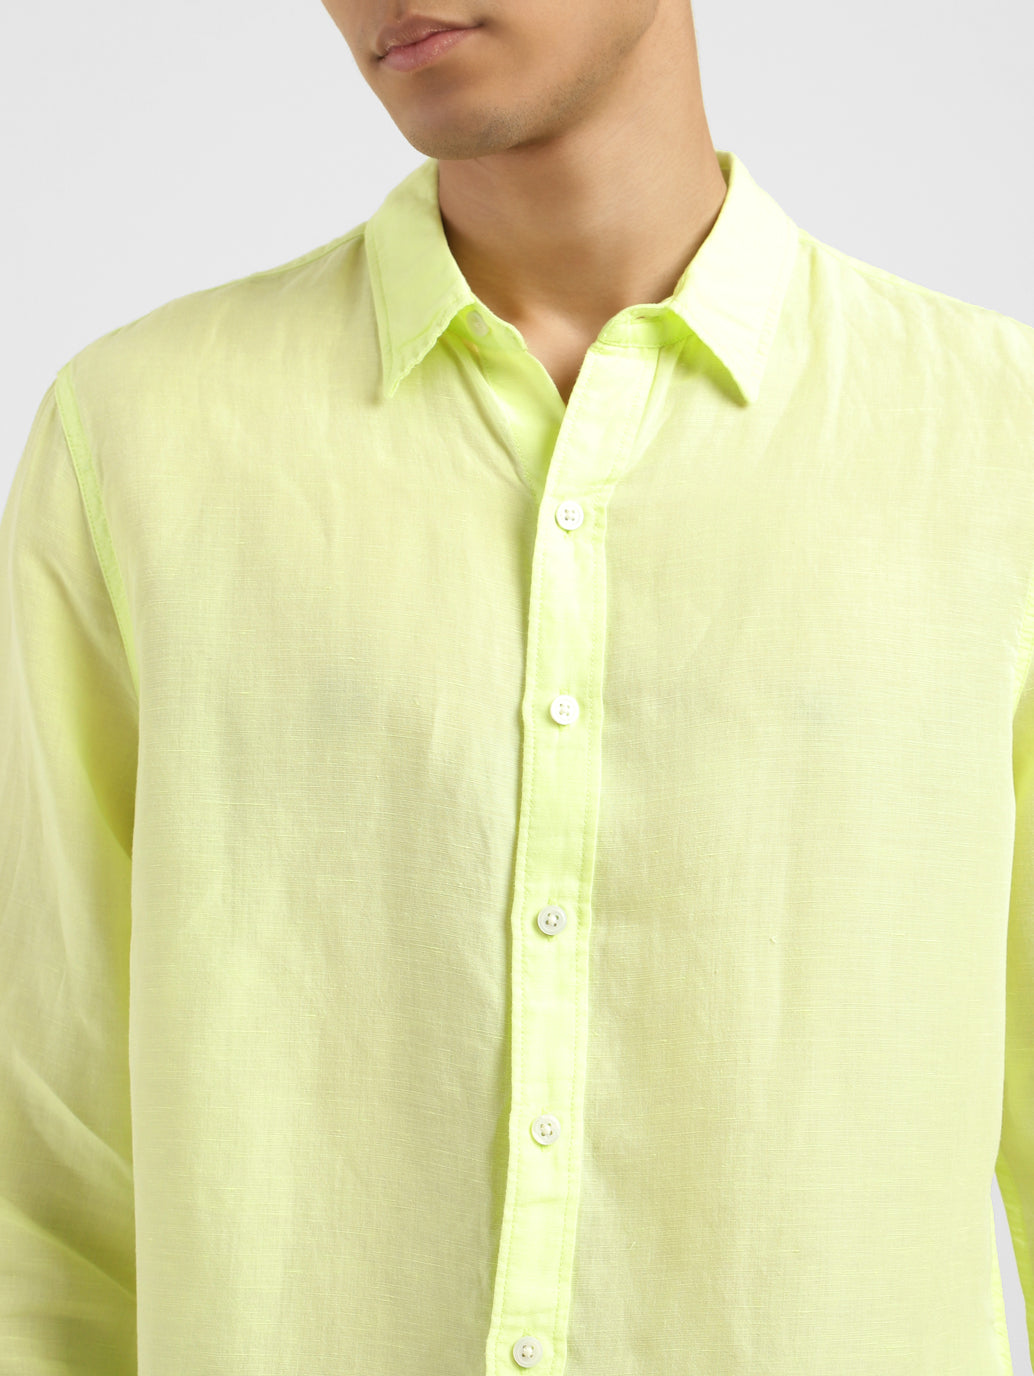 Men's Solid Spread Collar Linen Shirt Yellow